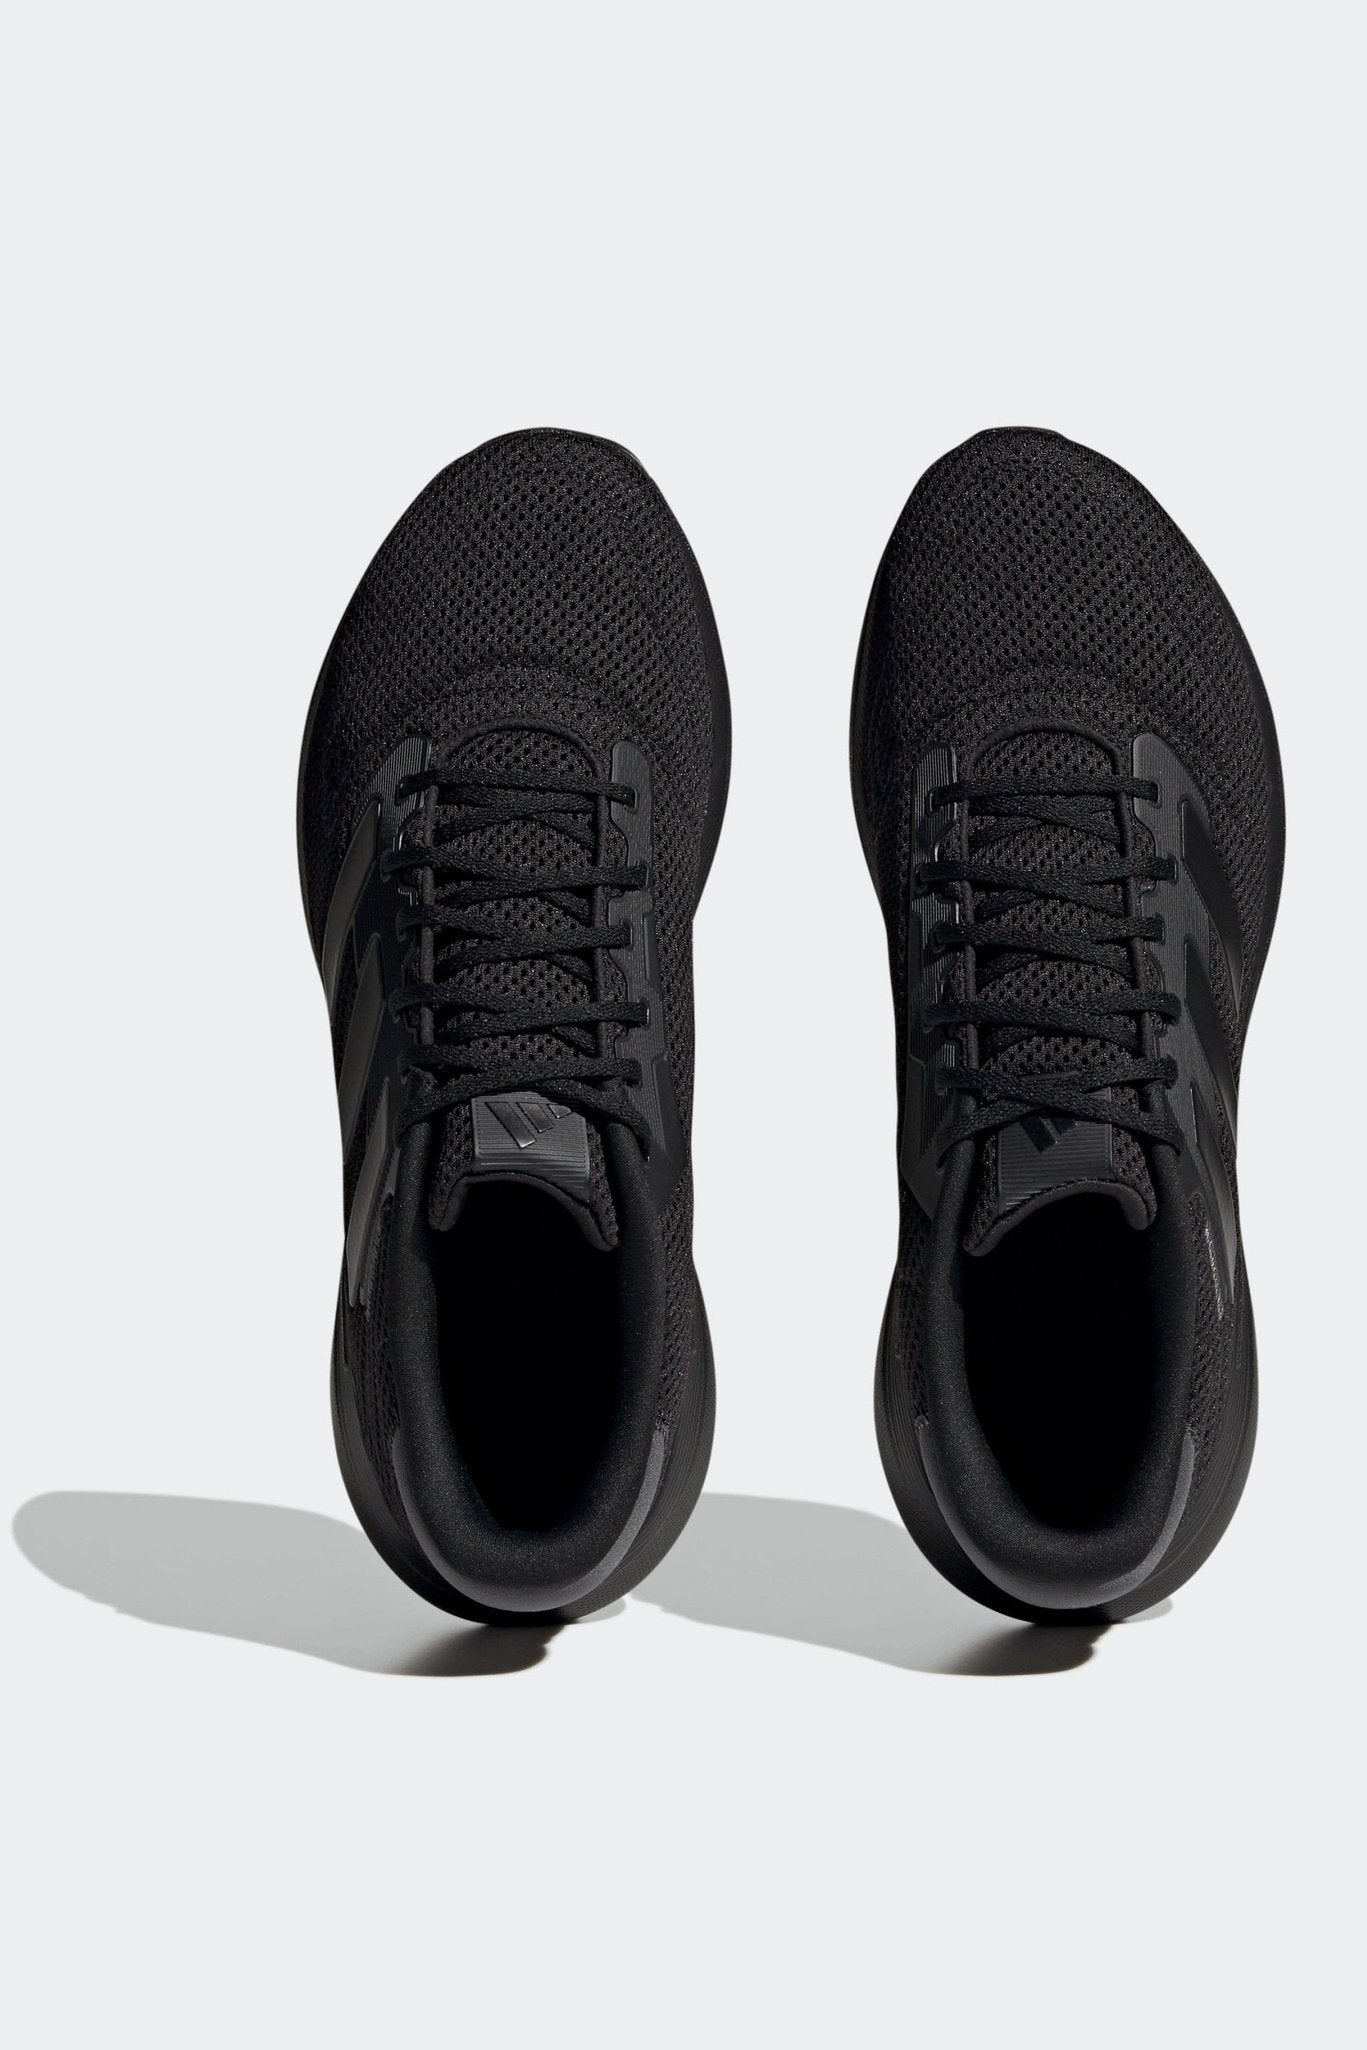 ADIDAS - נעלי ספורט לגברים RESPONSE RUNNER U בצבע שחור - MASHBIR//365